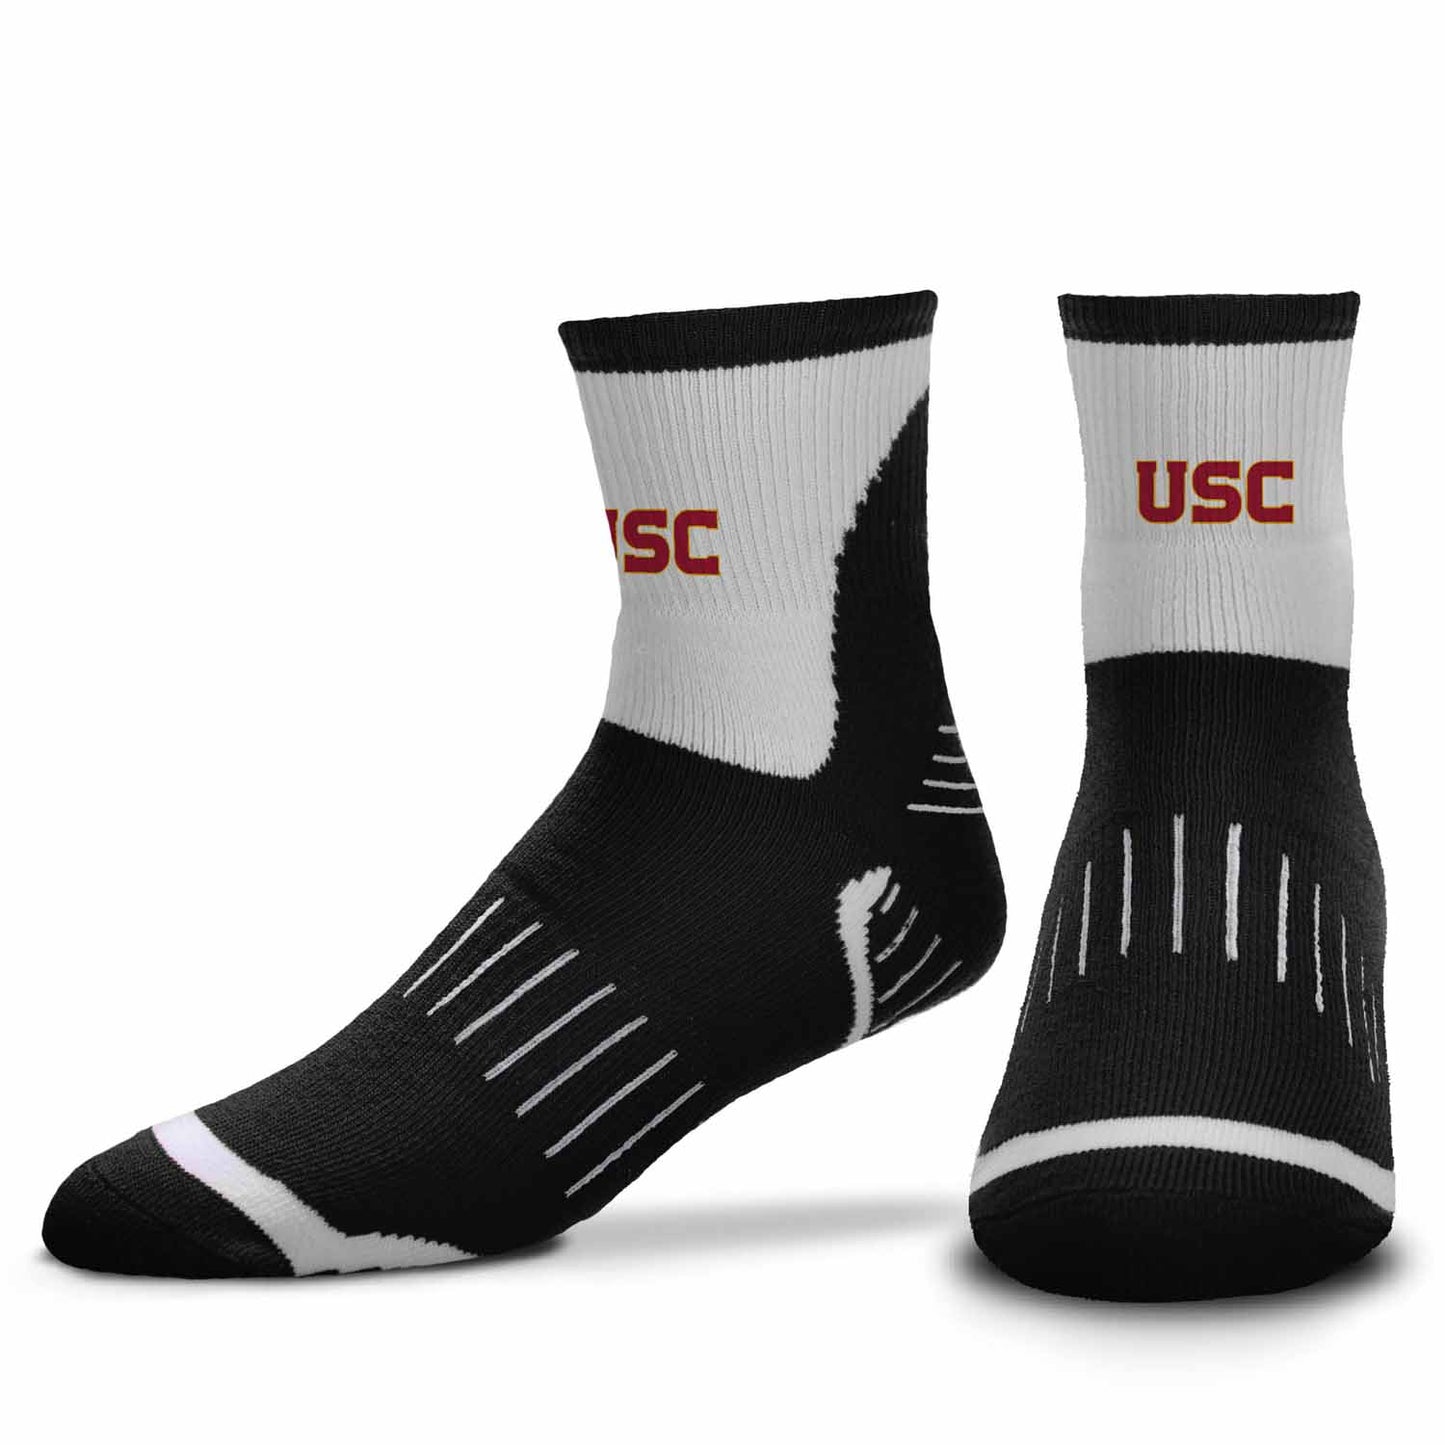 USC Trojans Adult Surge Quarter Length Crew Socks for Men and Women - Black